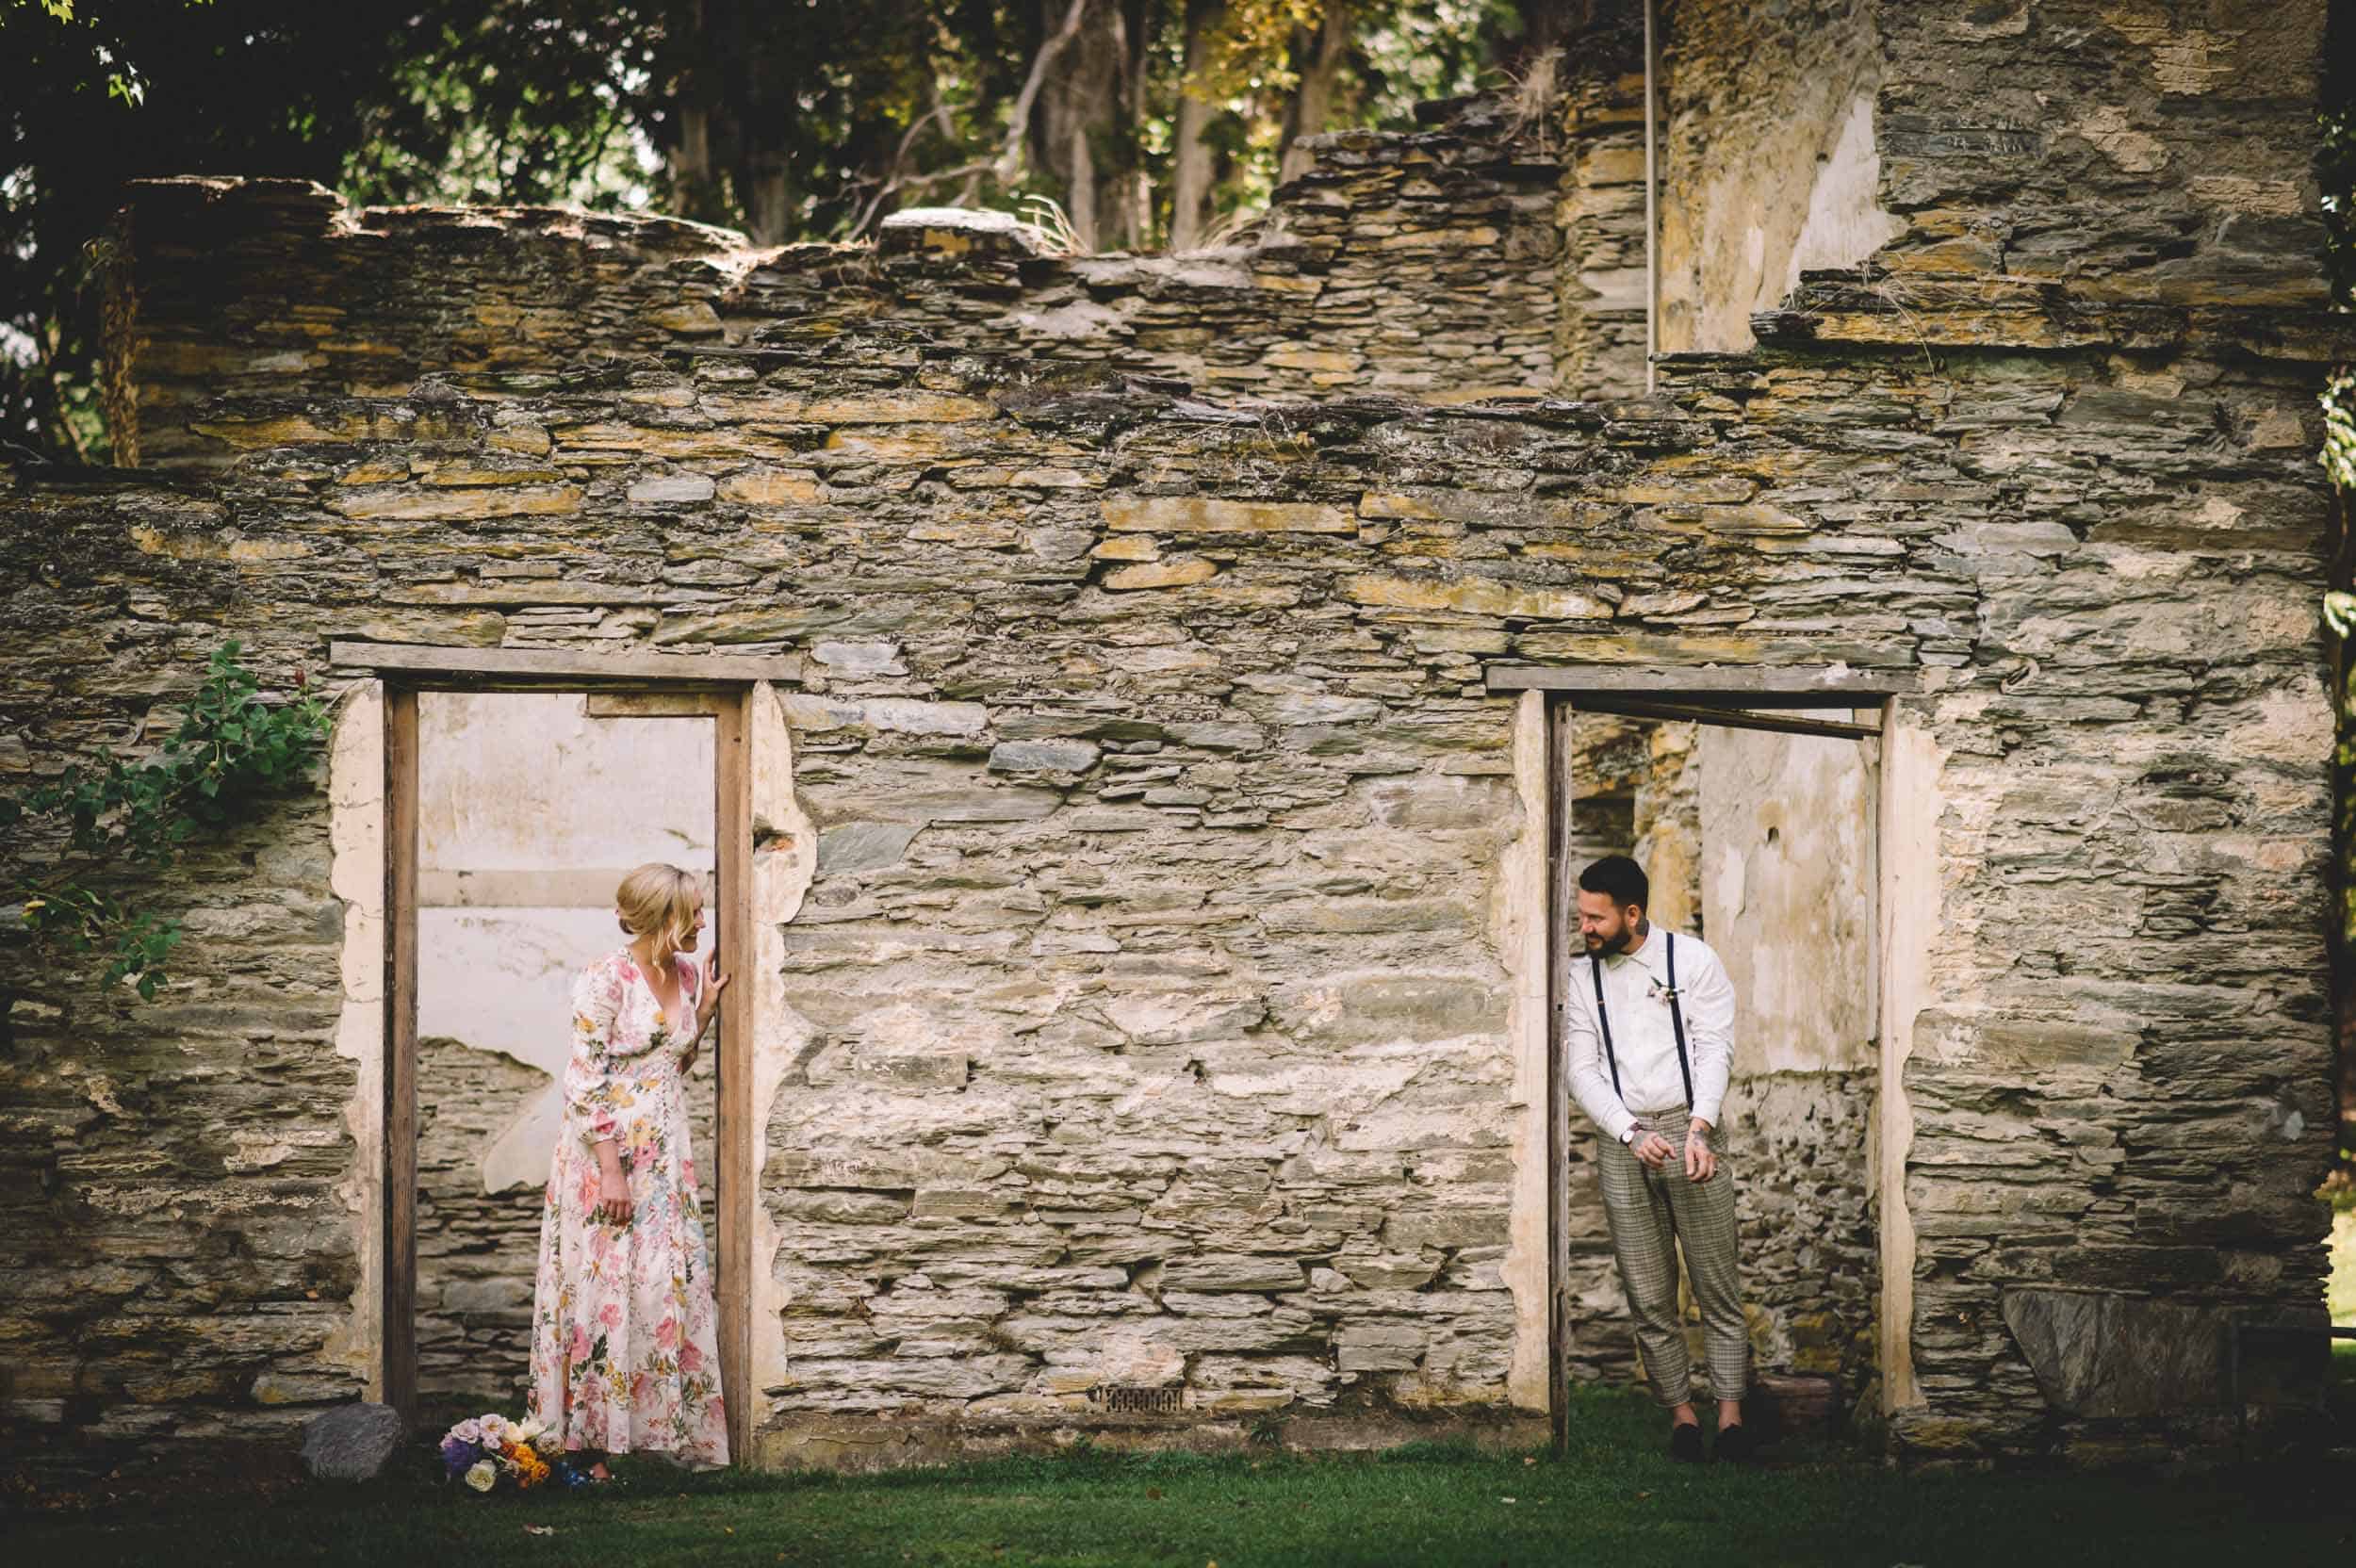 Nick & Nina's Thurlby Domain Elopement bride & groom photos old stone ruins